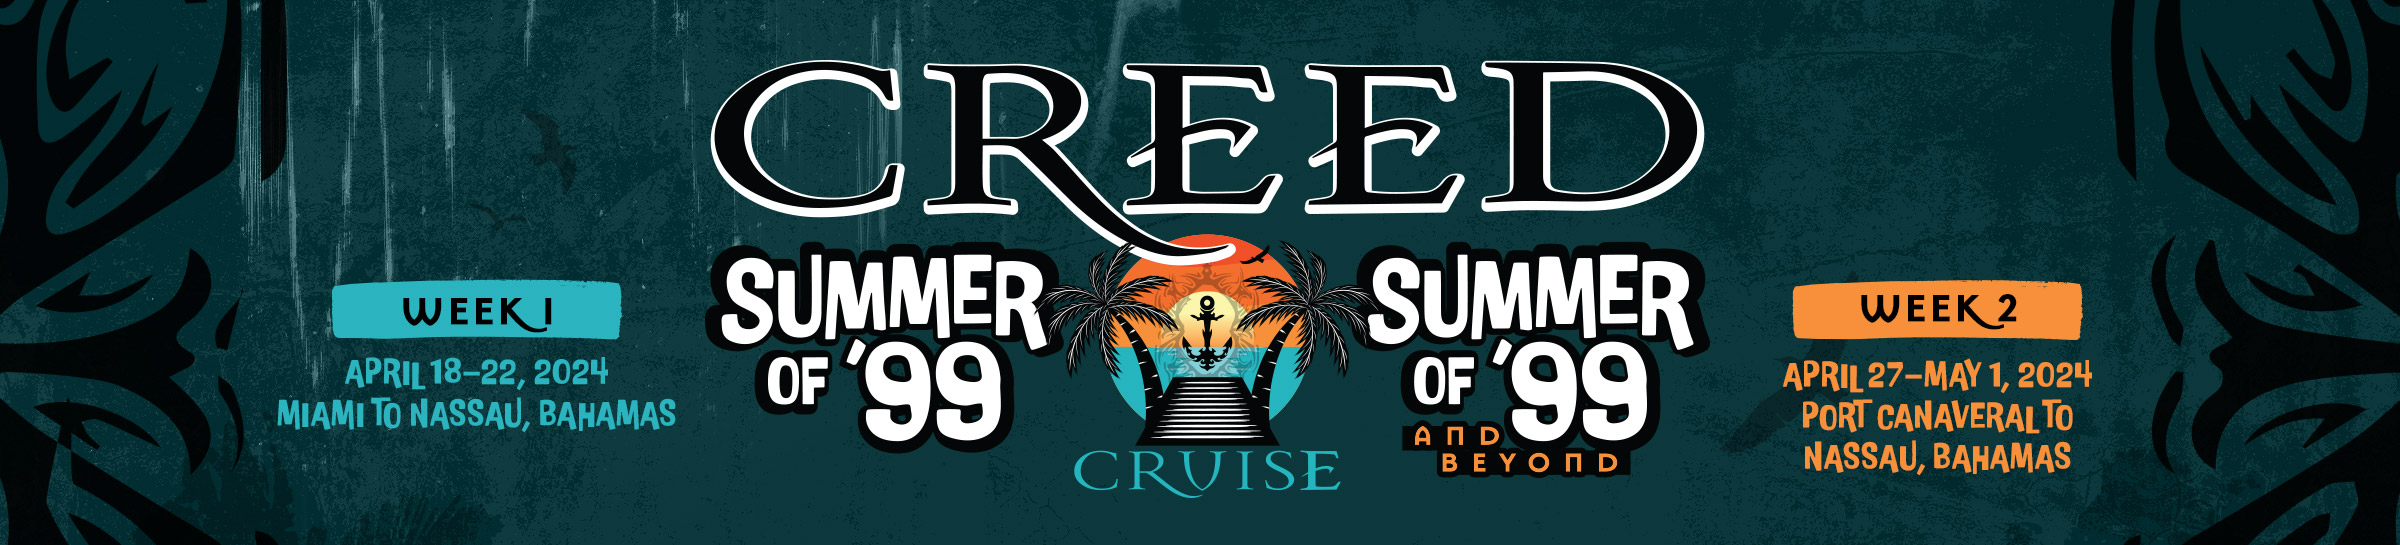 Summer of '99 Cruise